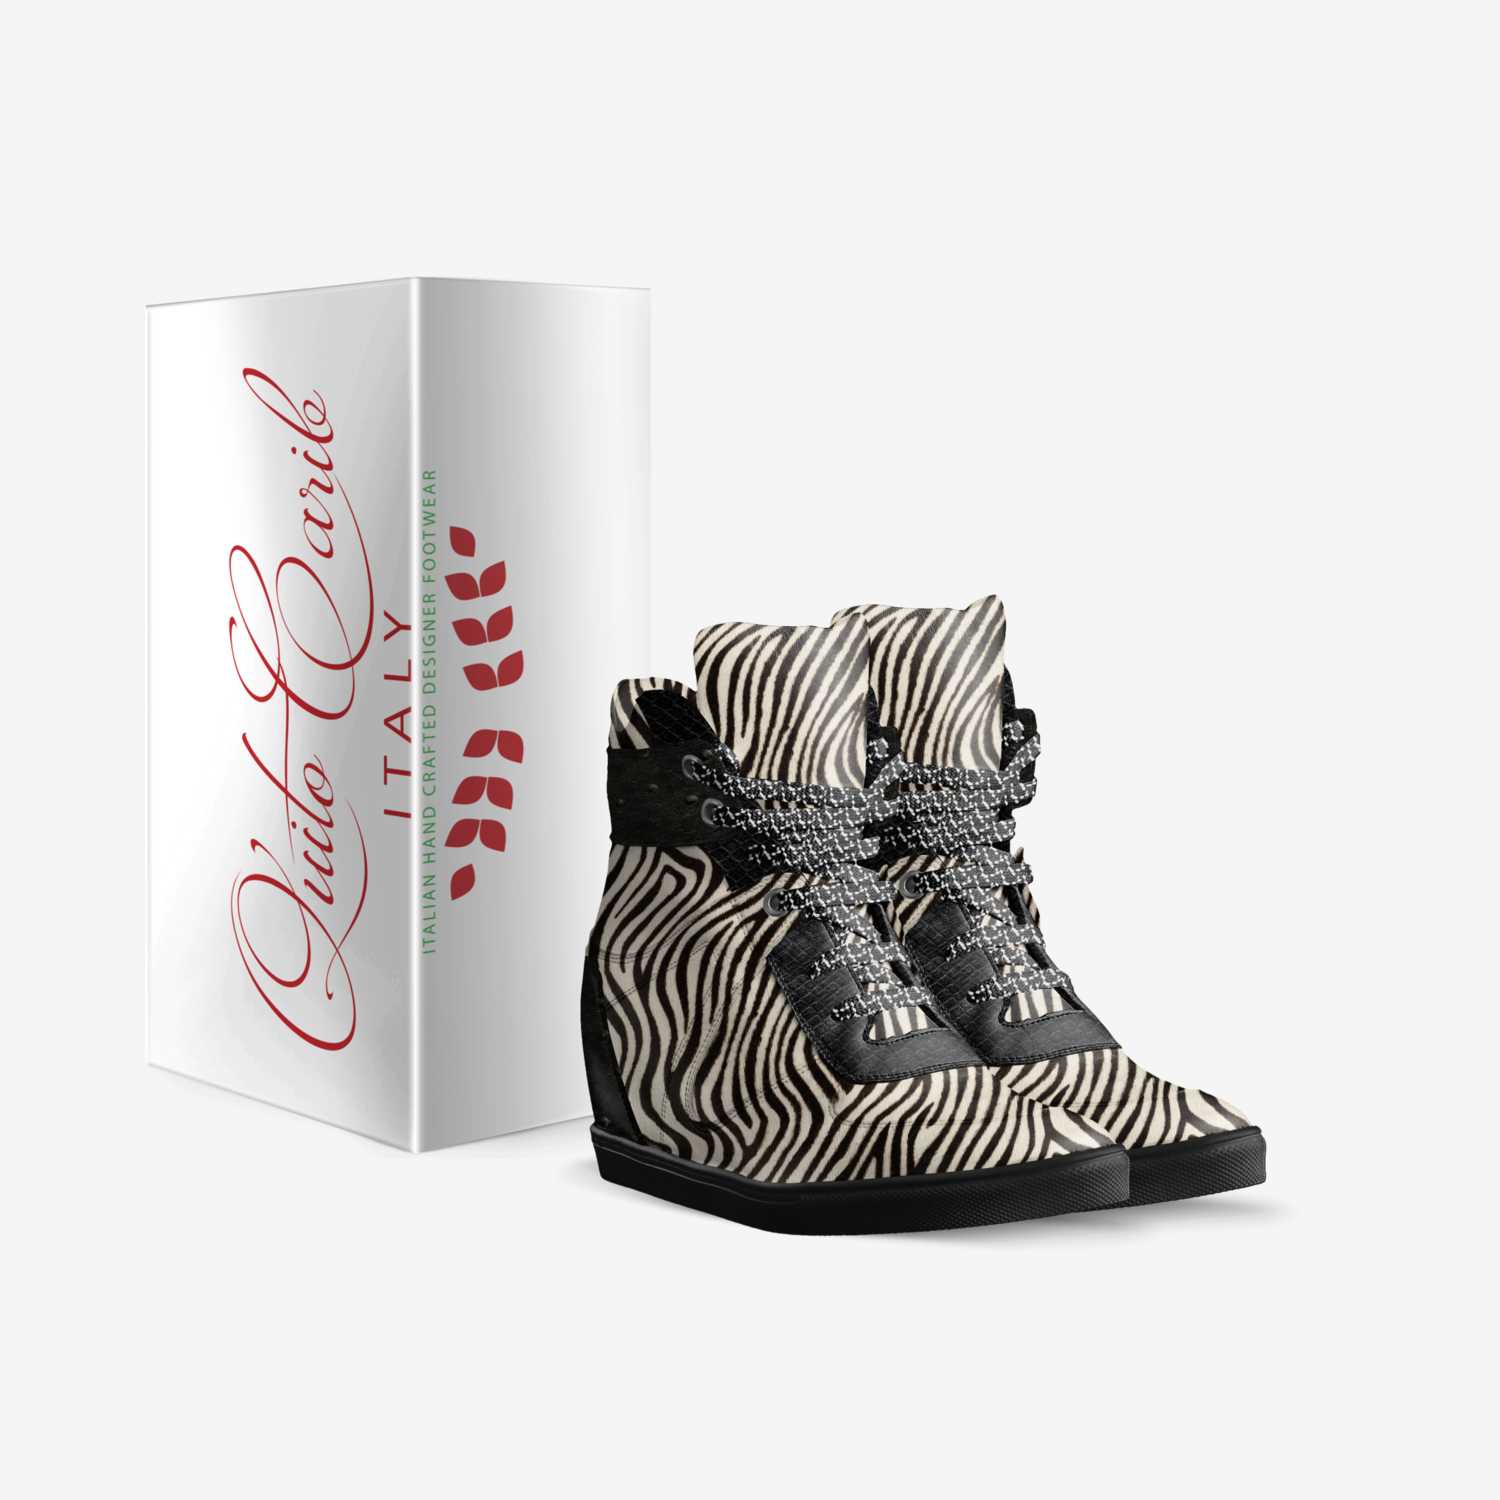 QUITO CARIB custom made in Italy shoes by M Ramirez Deheywood | Box view